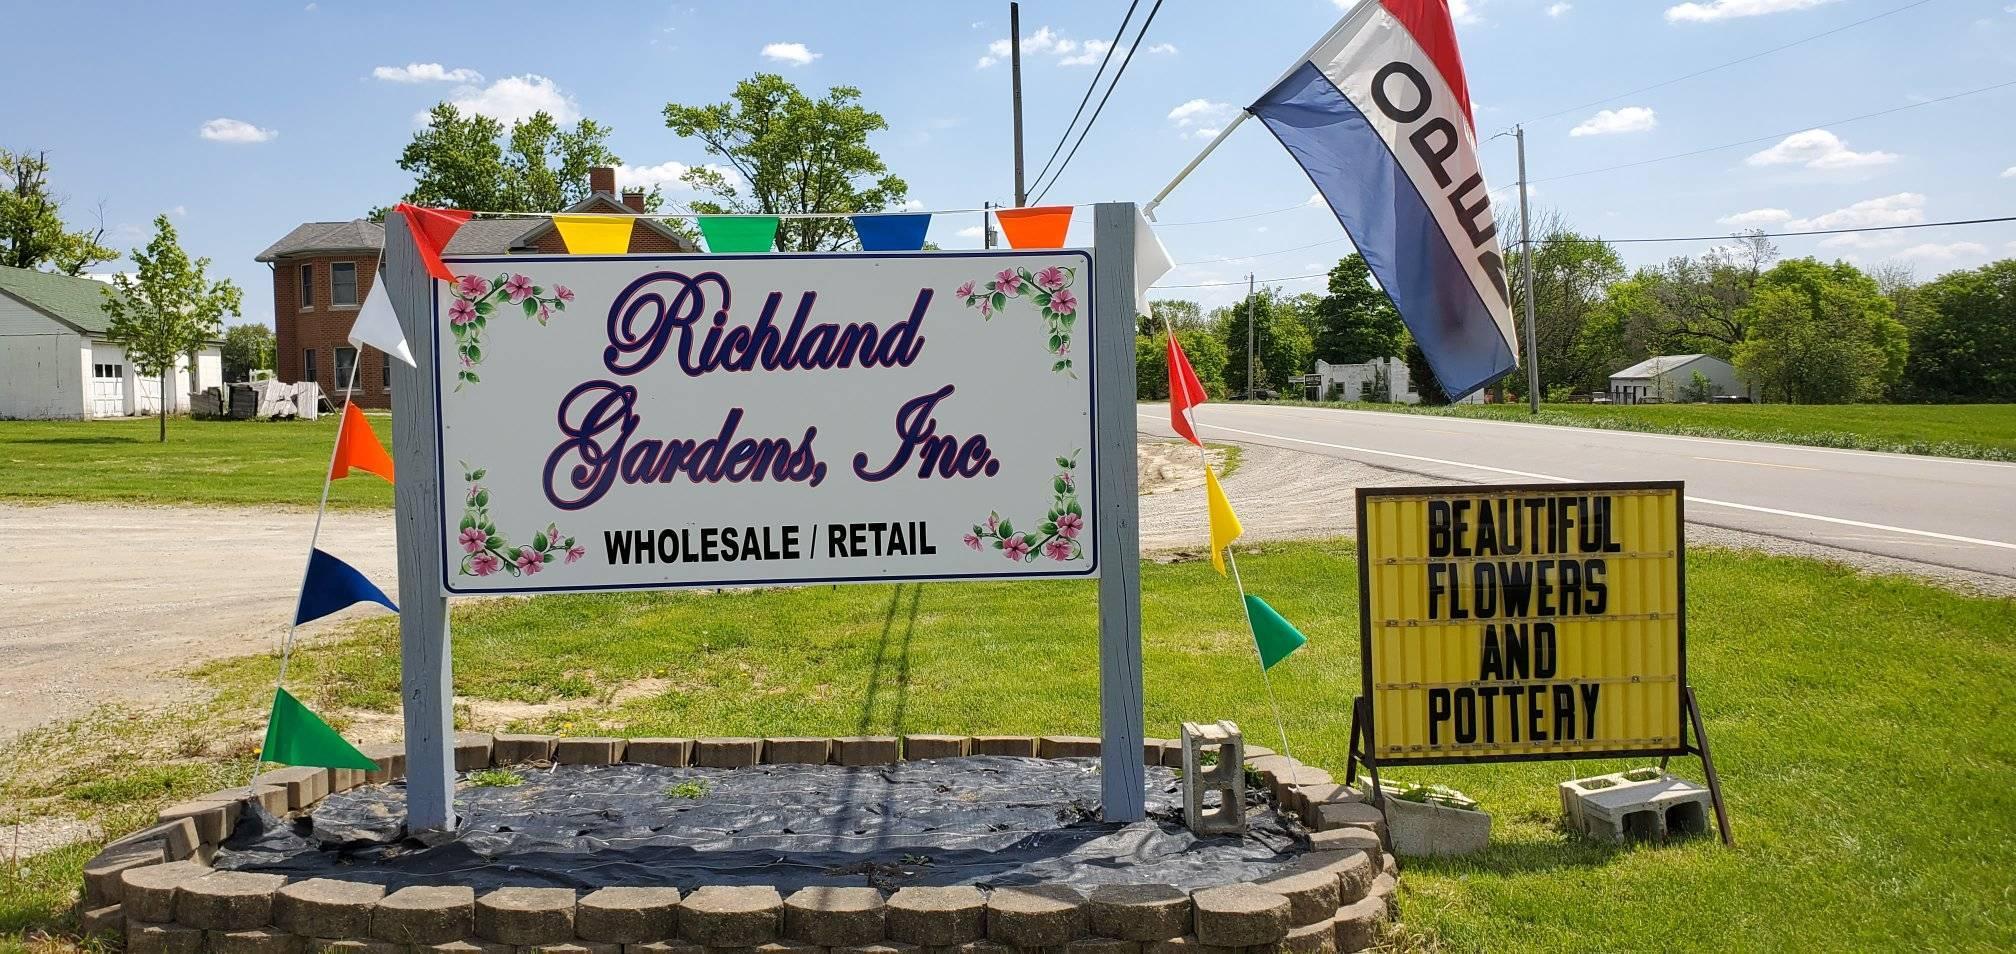 Richland Gardens, Inc.